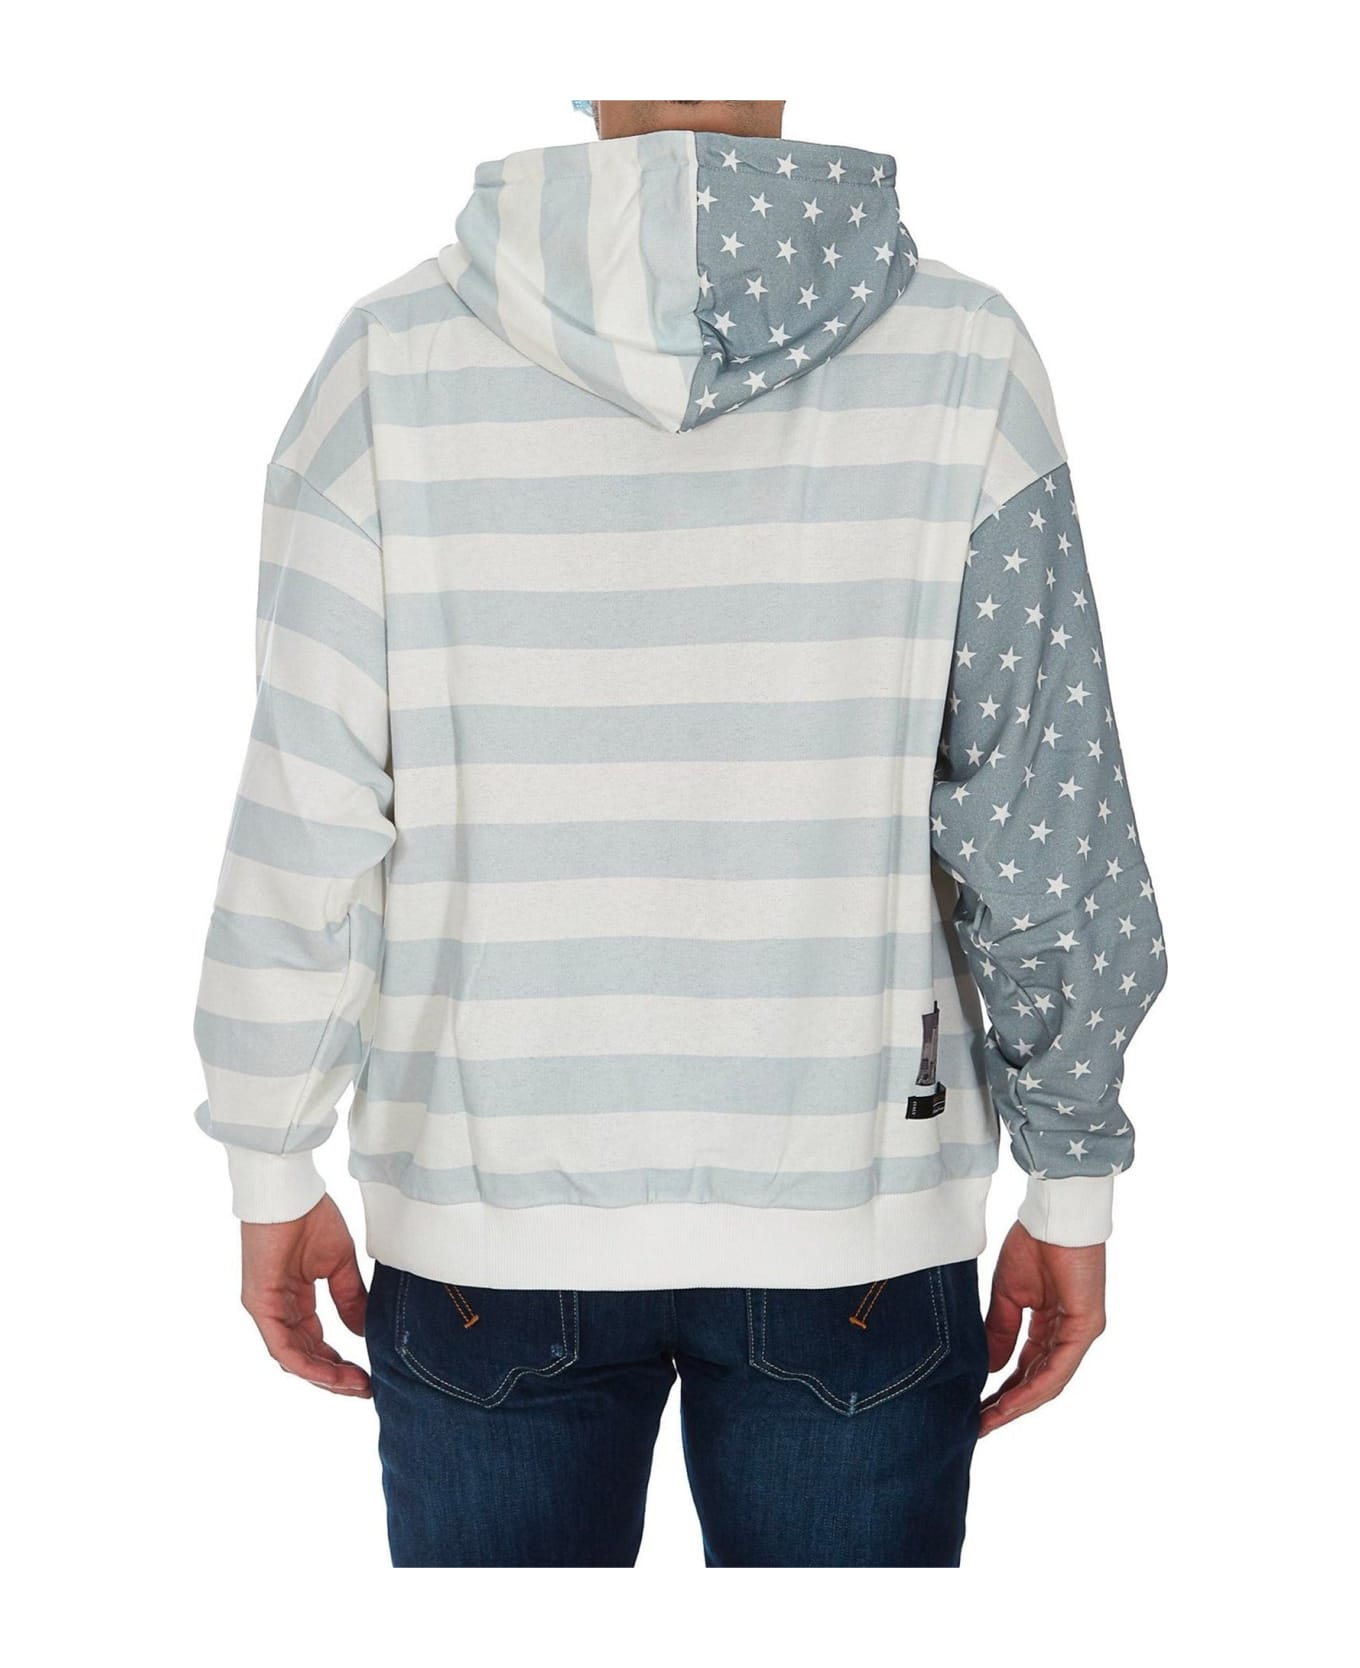 Buscemi Hooded Sweatshirt - Gray